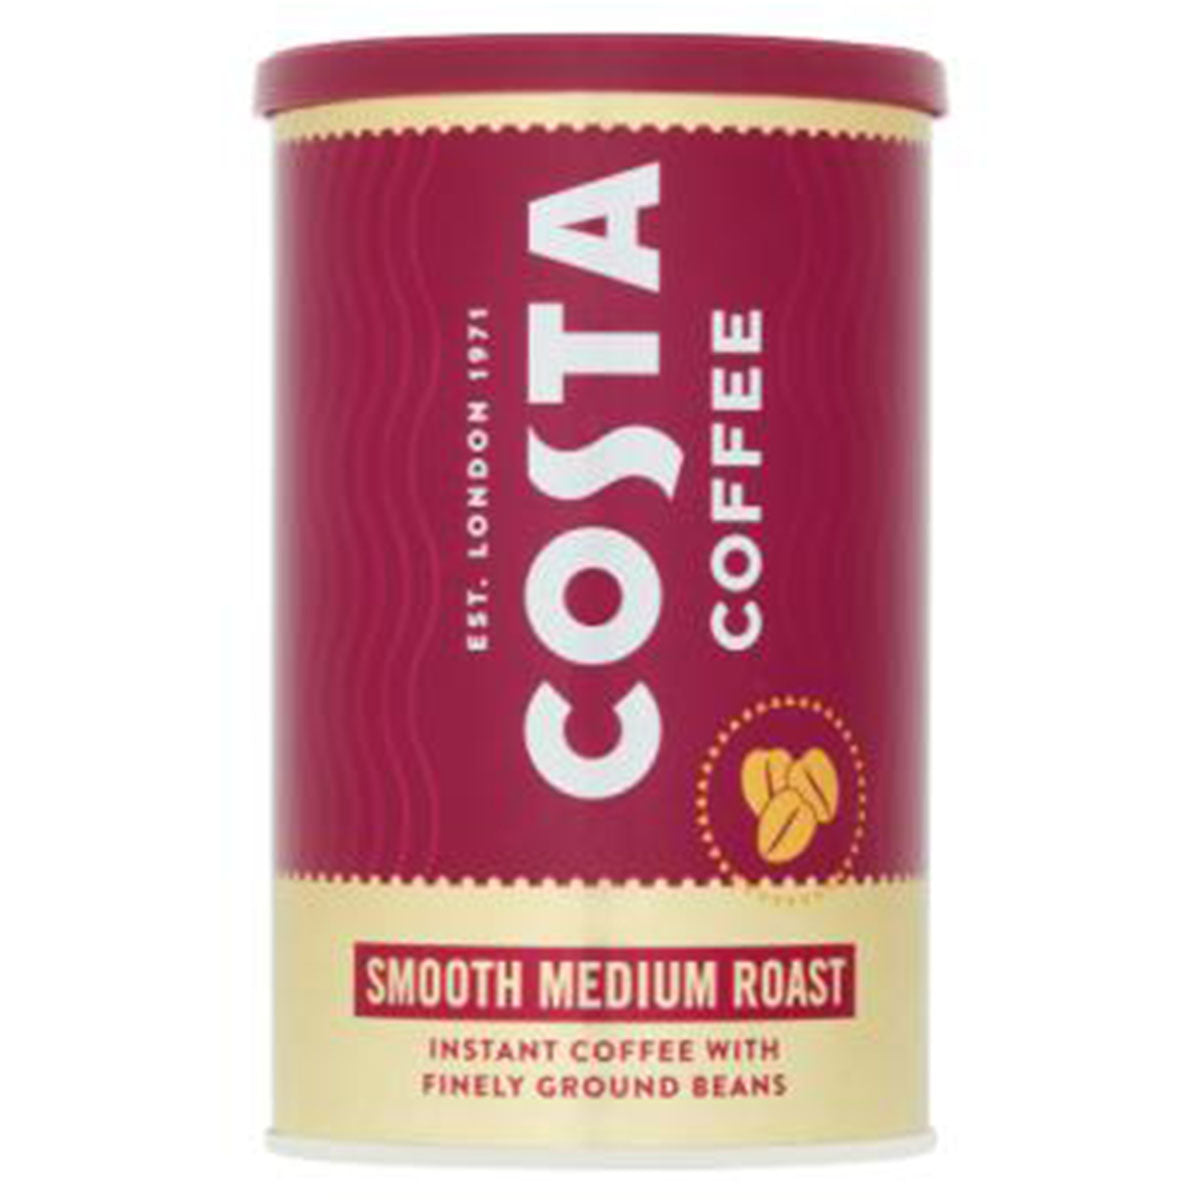 Costa Coffee - Smooth Medium Roast - 100g - Continental Food Store